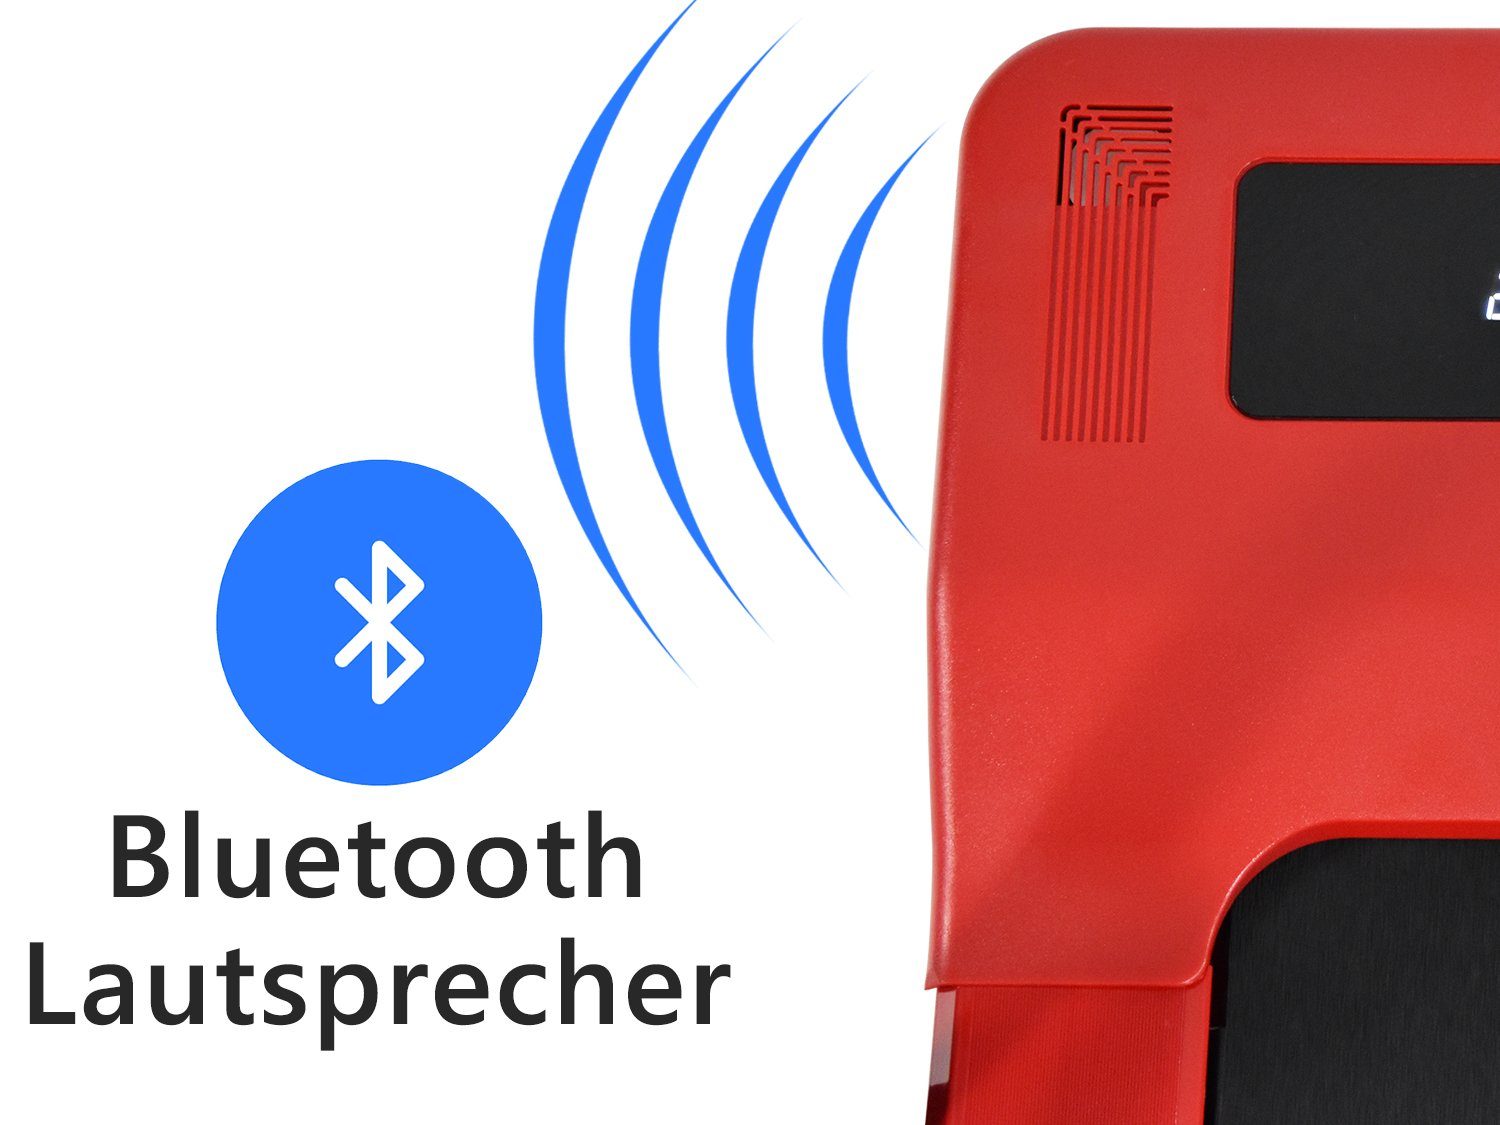 Maxofit Laufband Mini Laufband Bluetooth-Lautsprecher mit Schwarz MF-2 Walking Rot